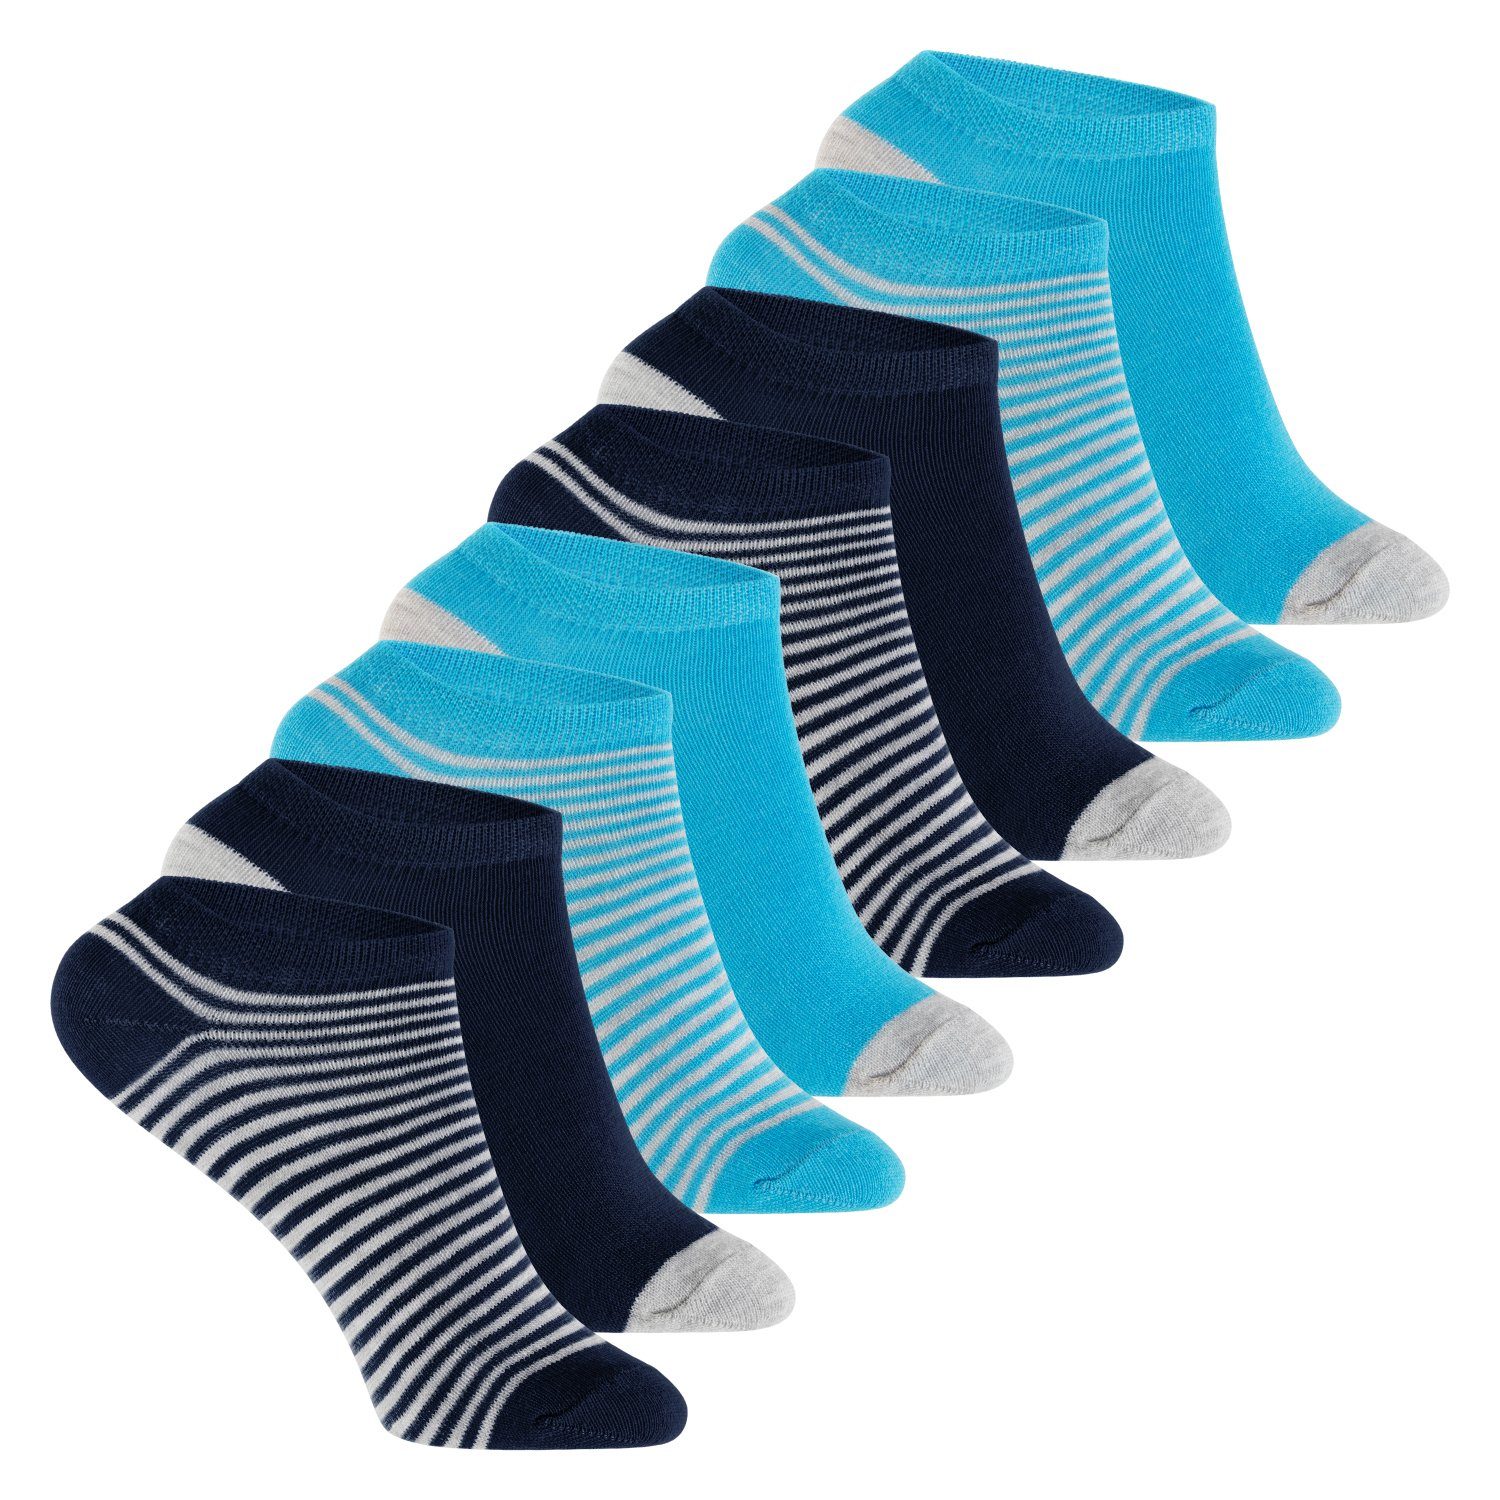 Footstar Kurzsocken Kinder Sneaker Socken (8 Paar) für Mädchen & Jungen, bunt blau geringelt